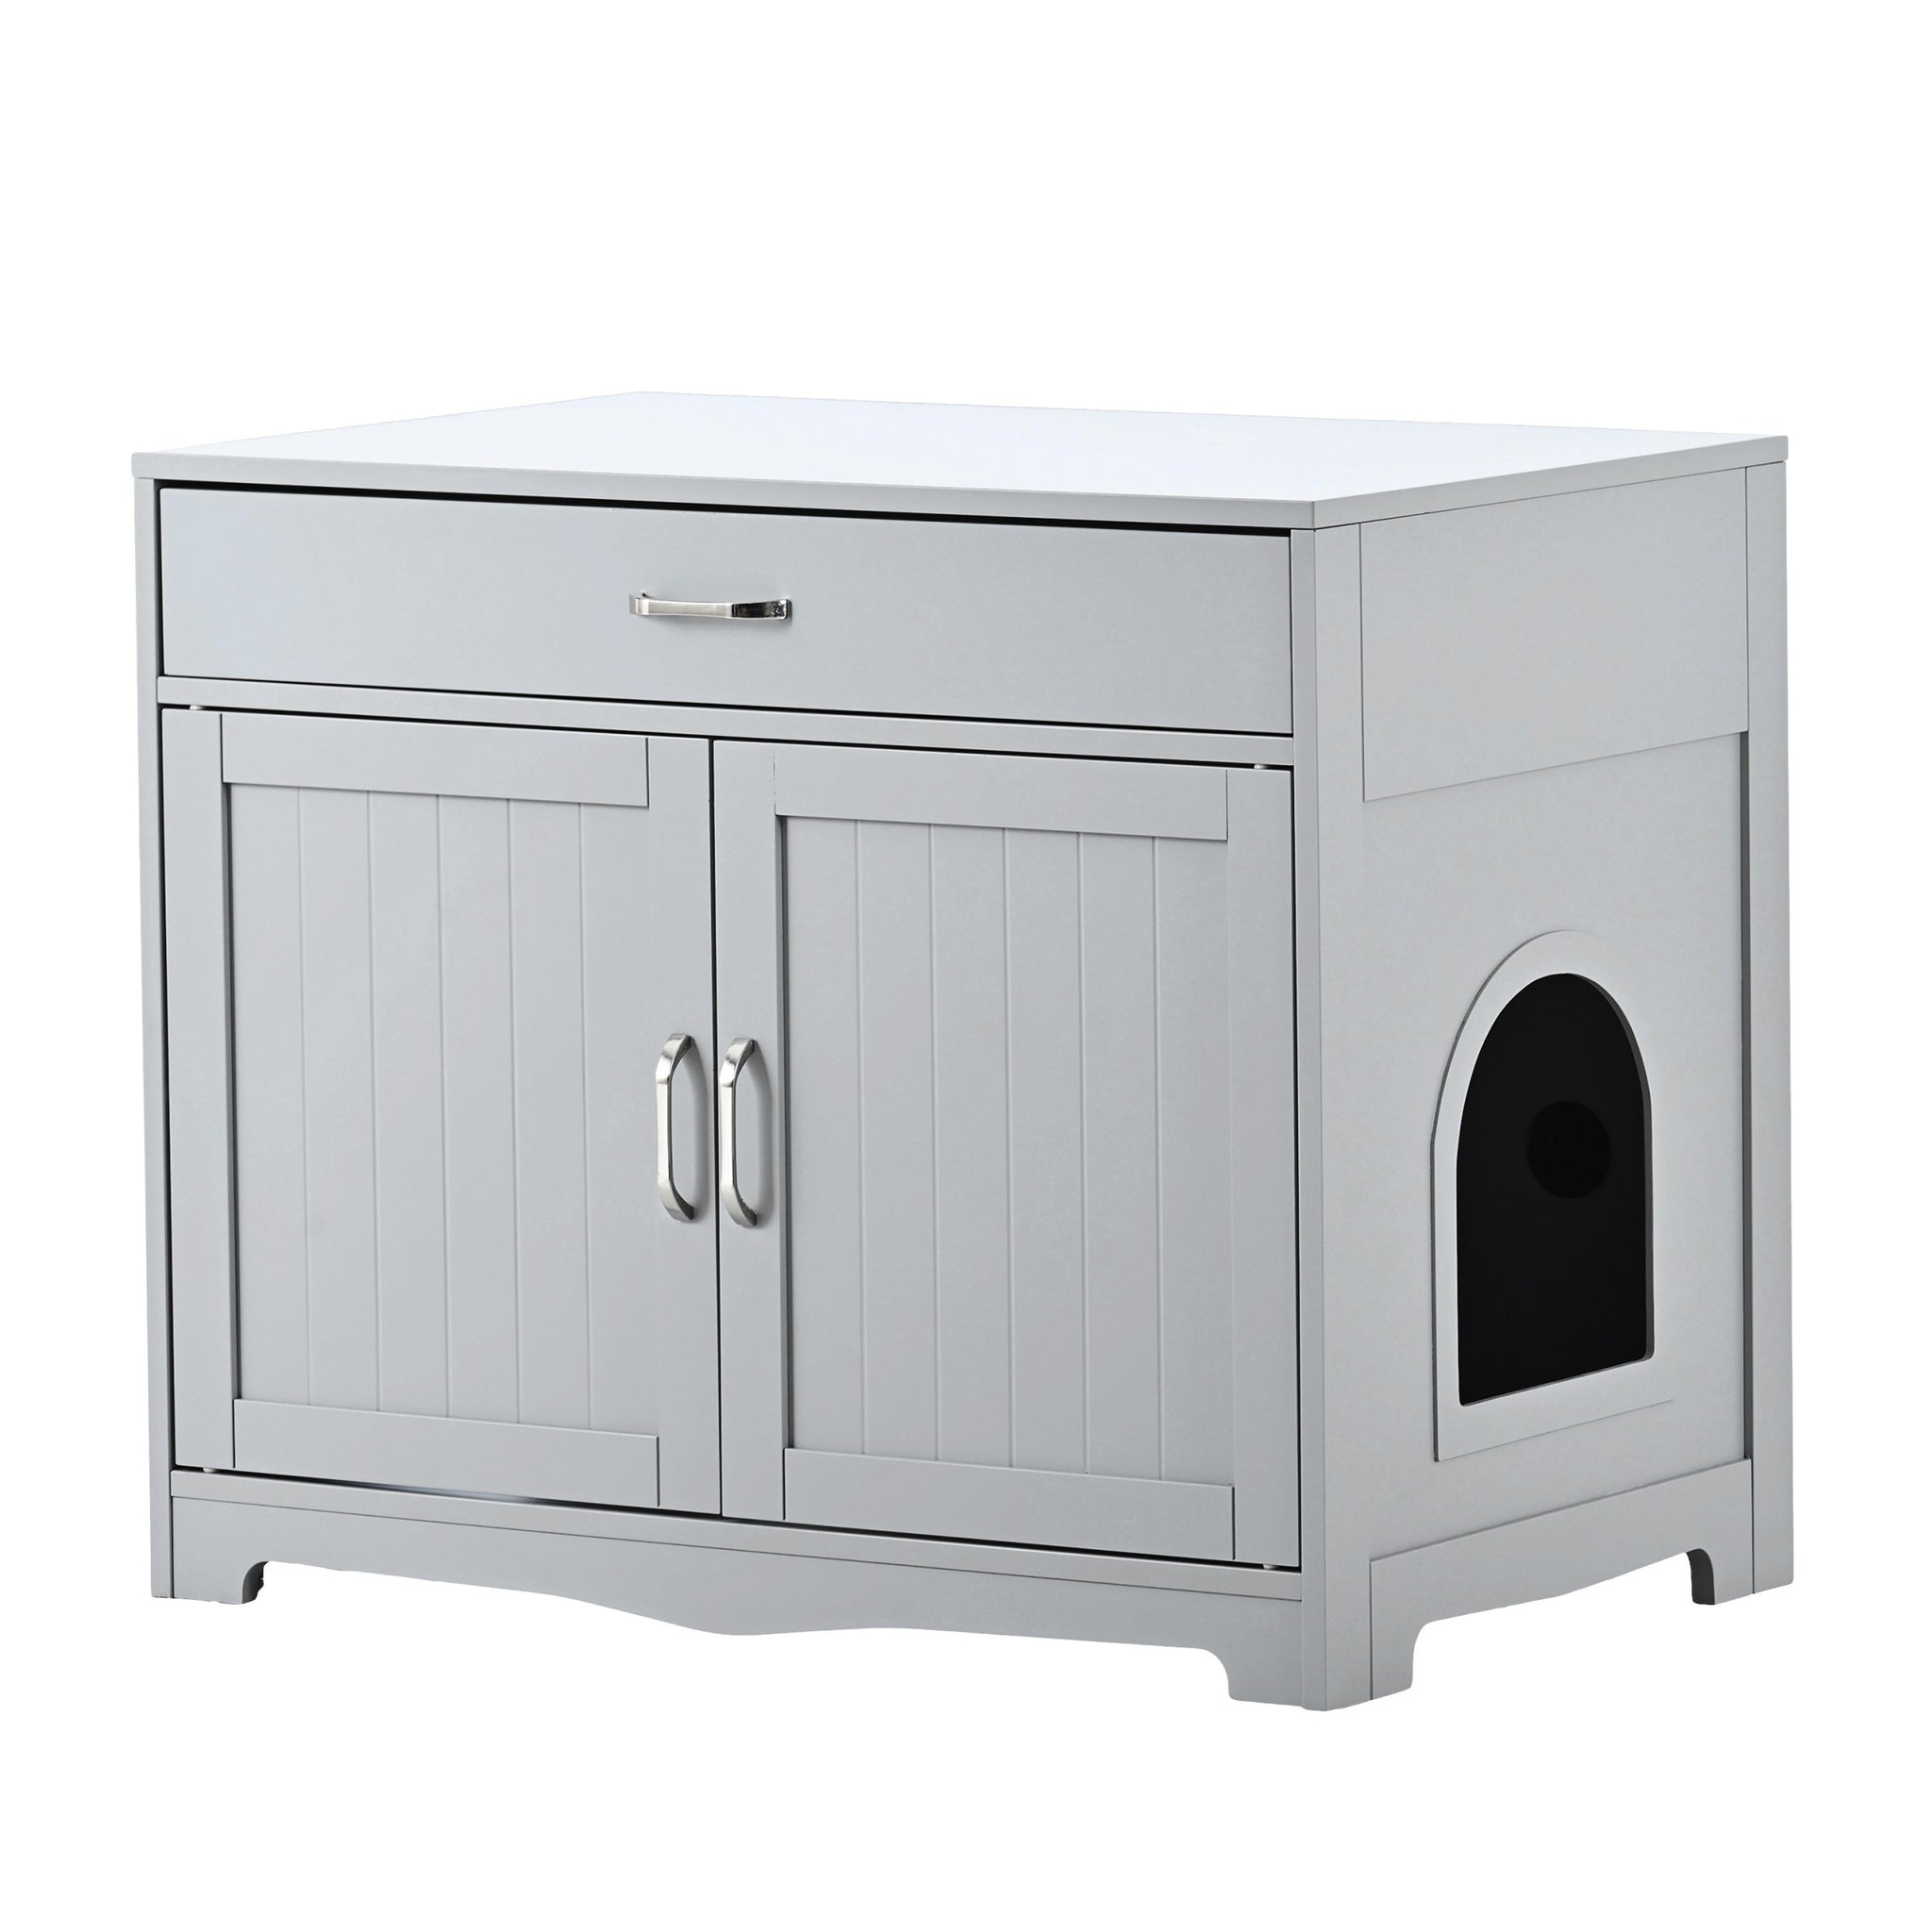 Litter Box Enclosure, Cat Litter Box Furniture with grey-mdf